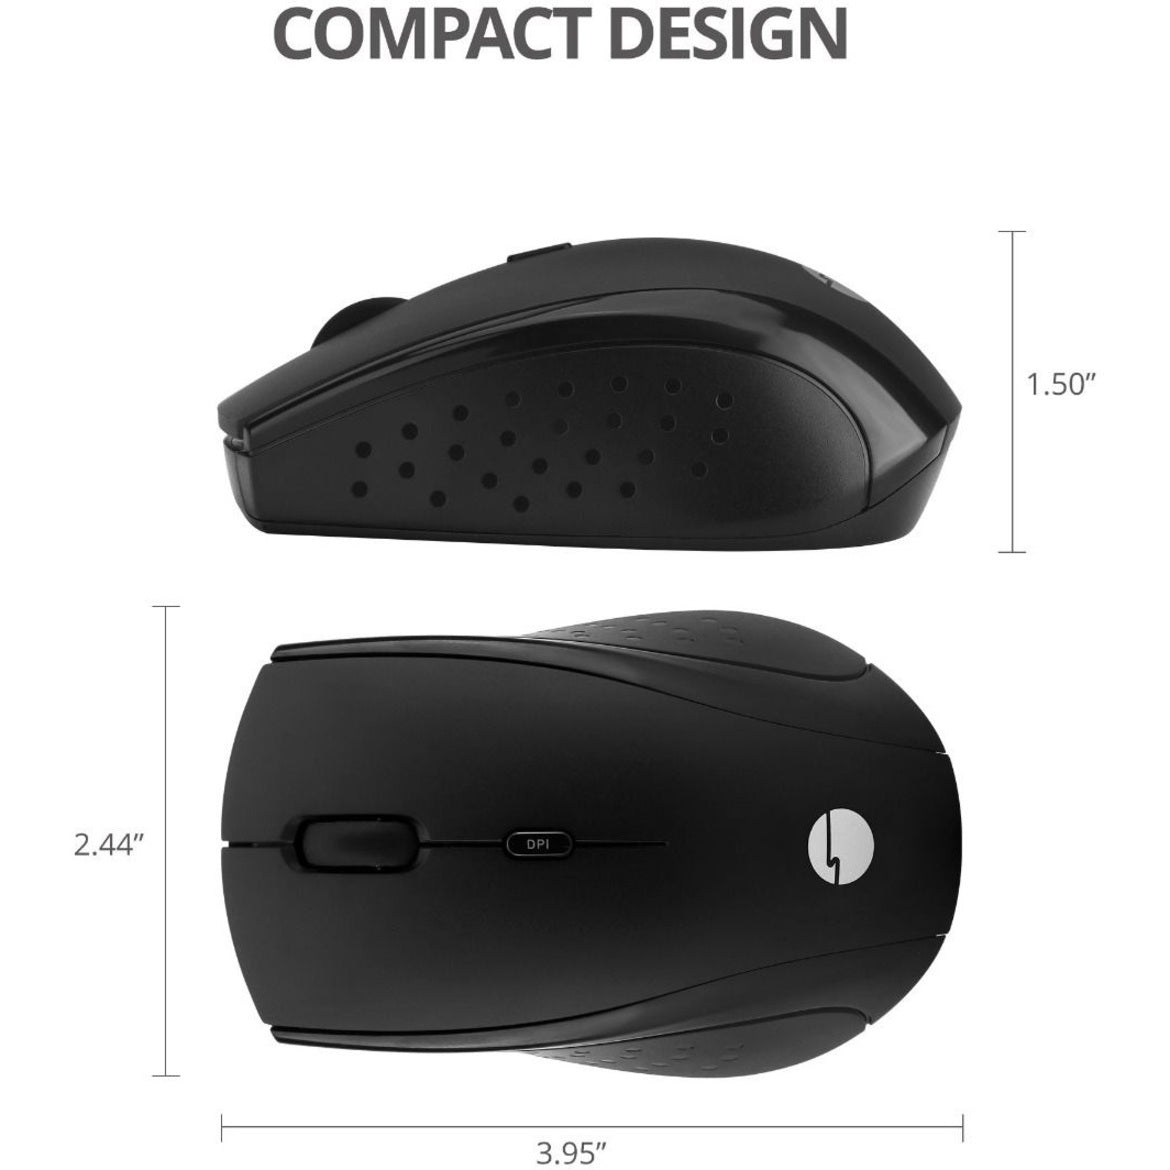 SIIG JK-WR0U11-S1 USB-C Wireless 2.4G 3-Button Mouse, 1600 DPI, Black